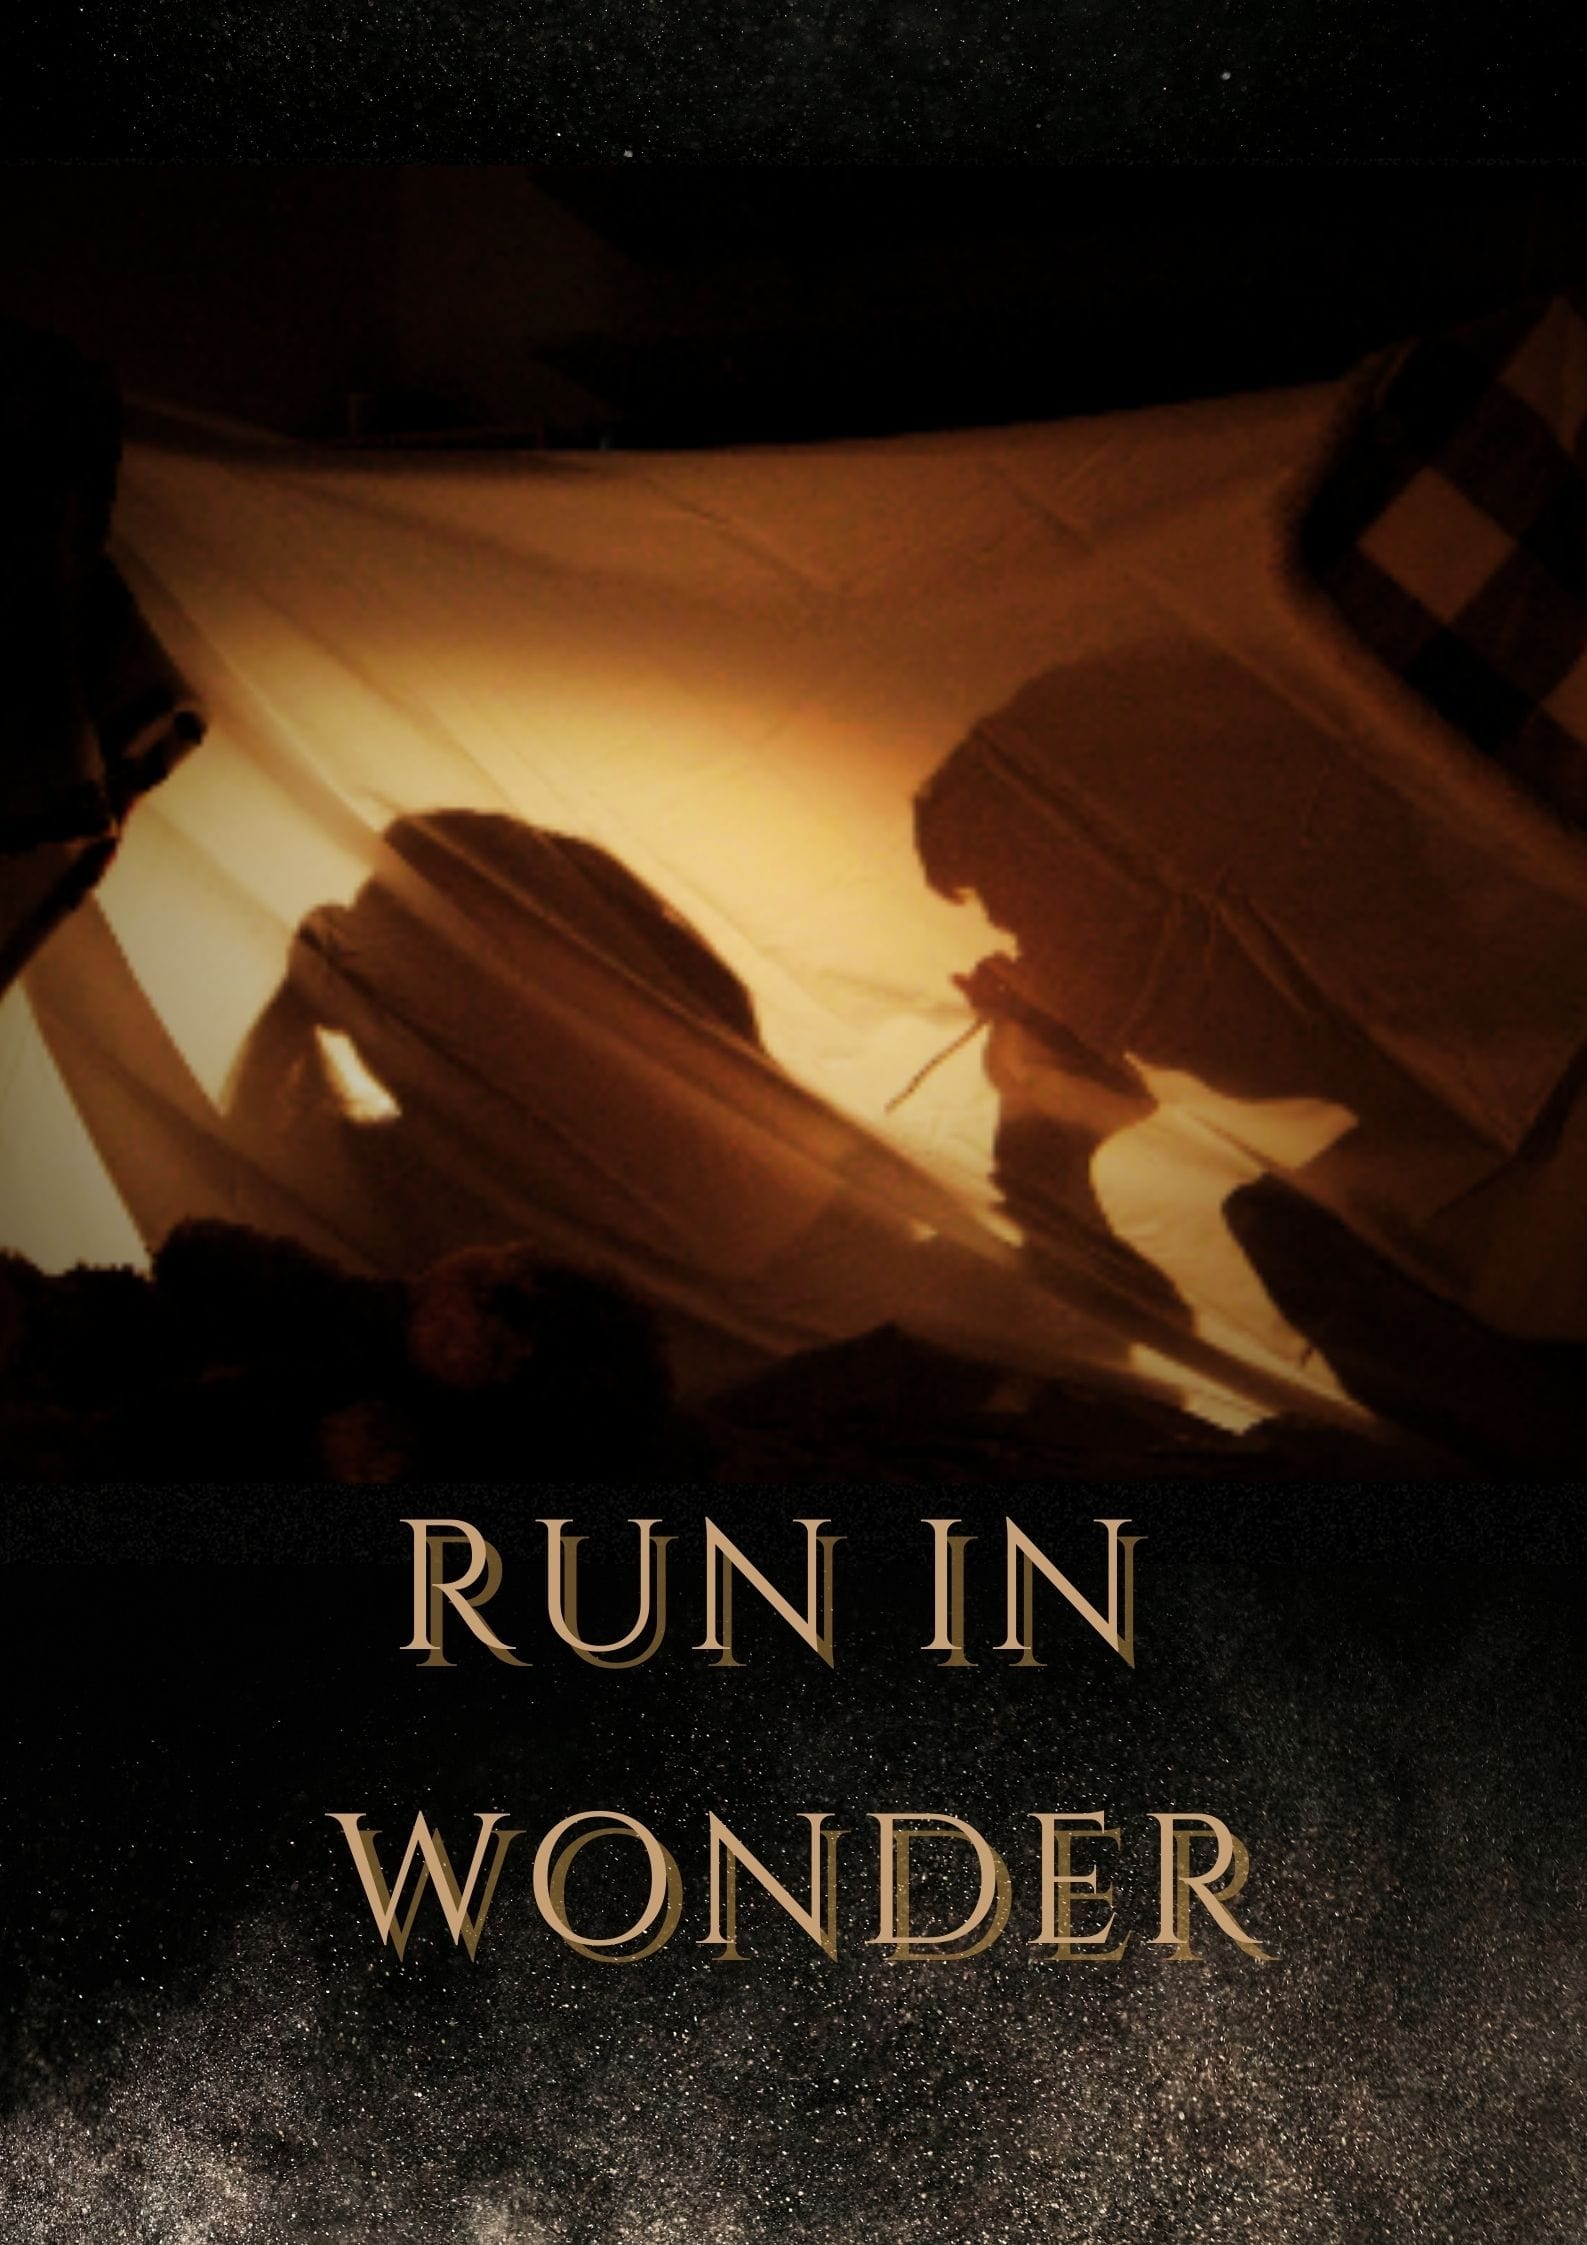 Run in Wonder